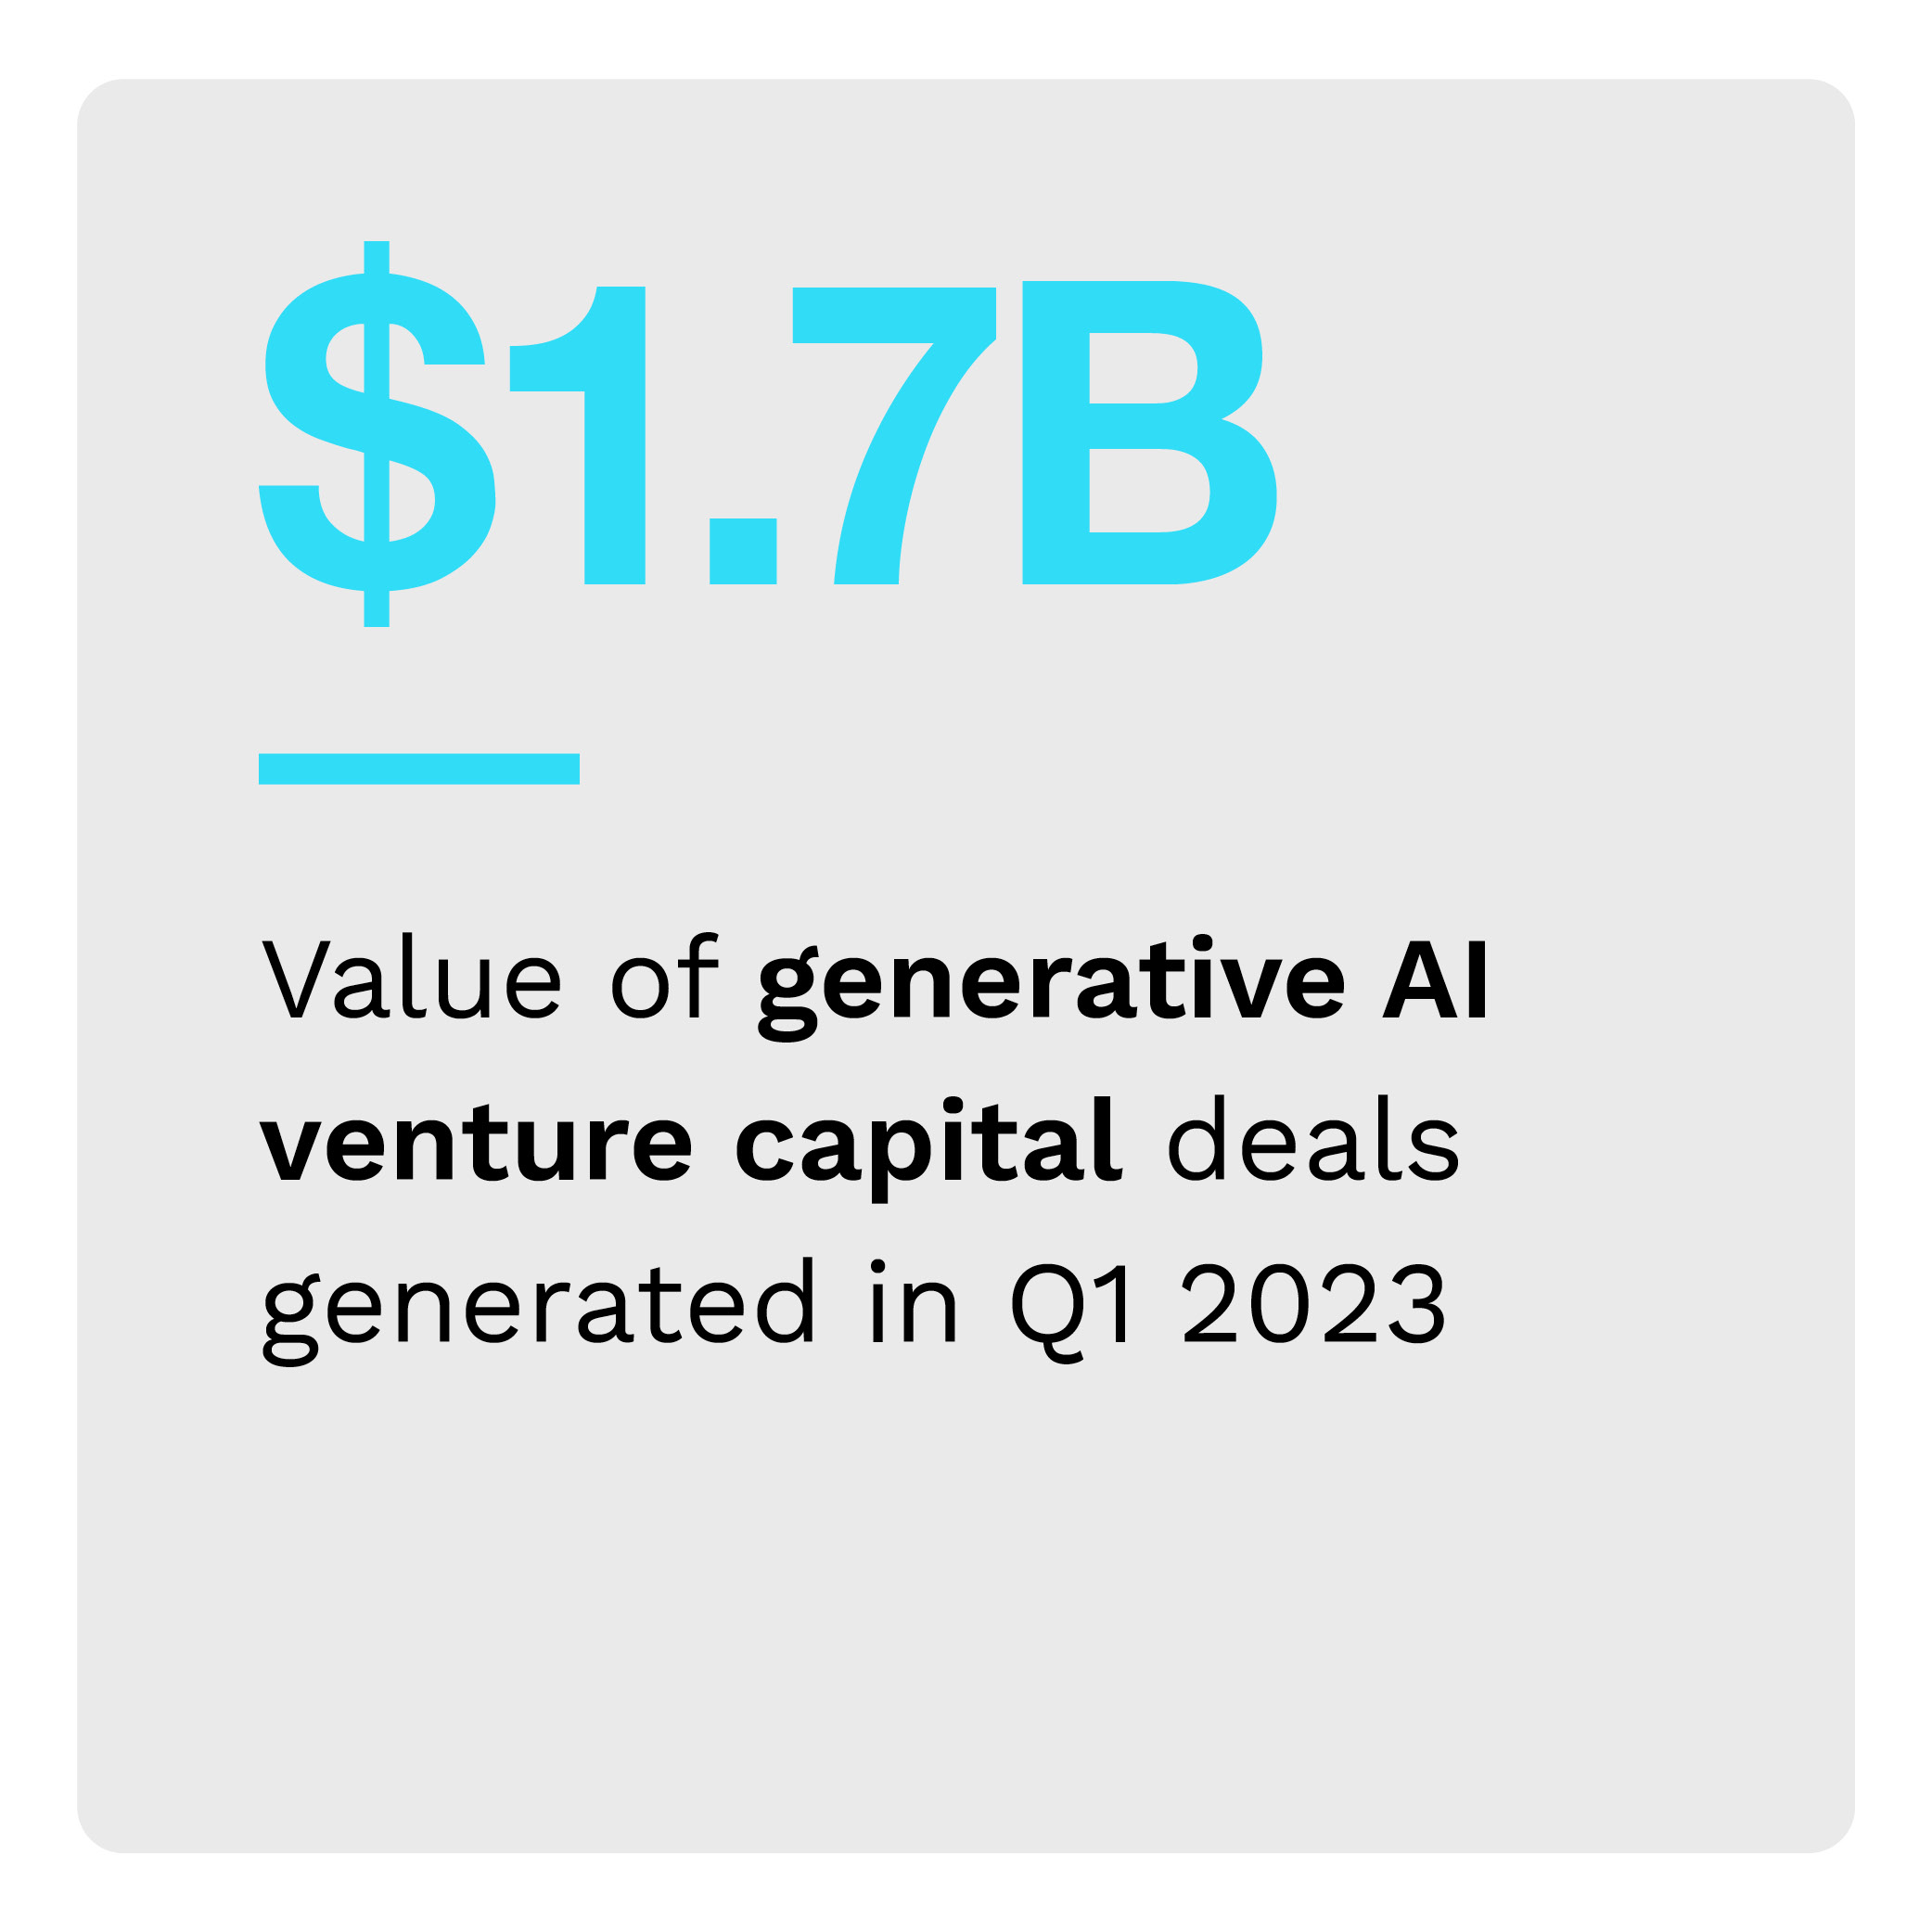 $1.7B: Value of generative AI venture capital deals generated in Q1 2023